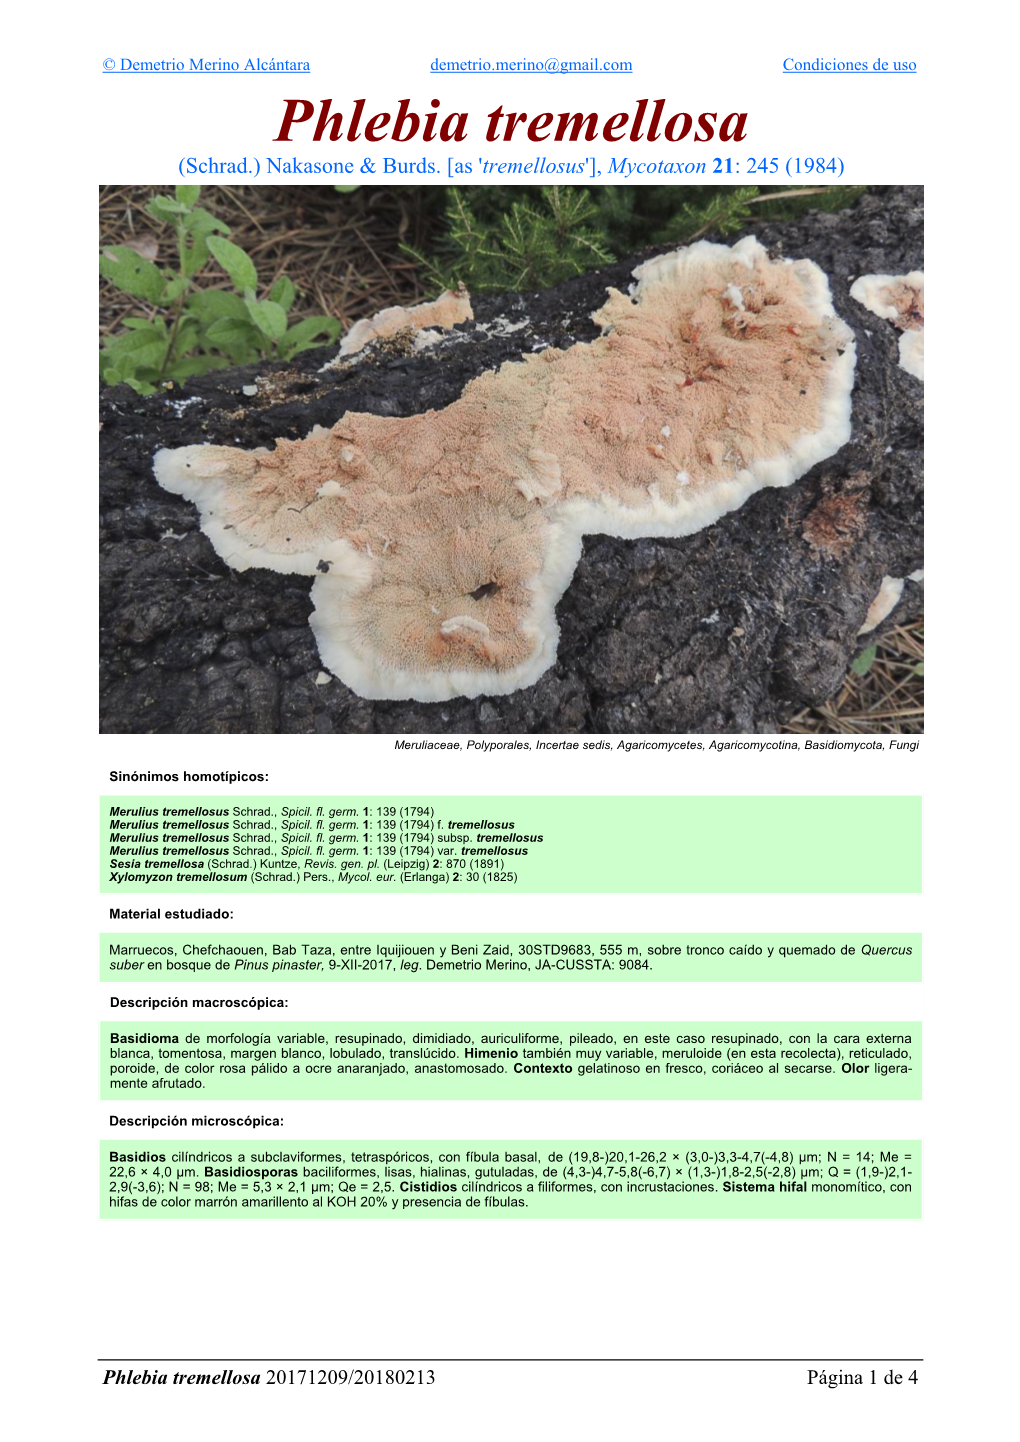 Phlebia Tremellosa Phlebia 4 De 1 Página 20171209/20180213